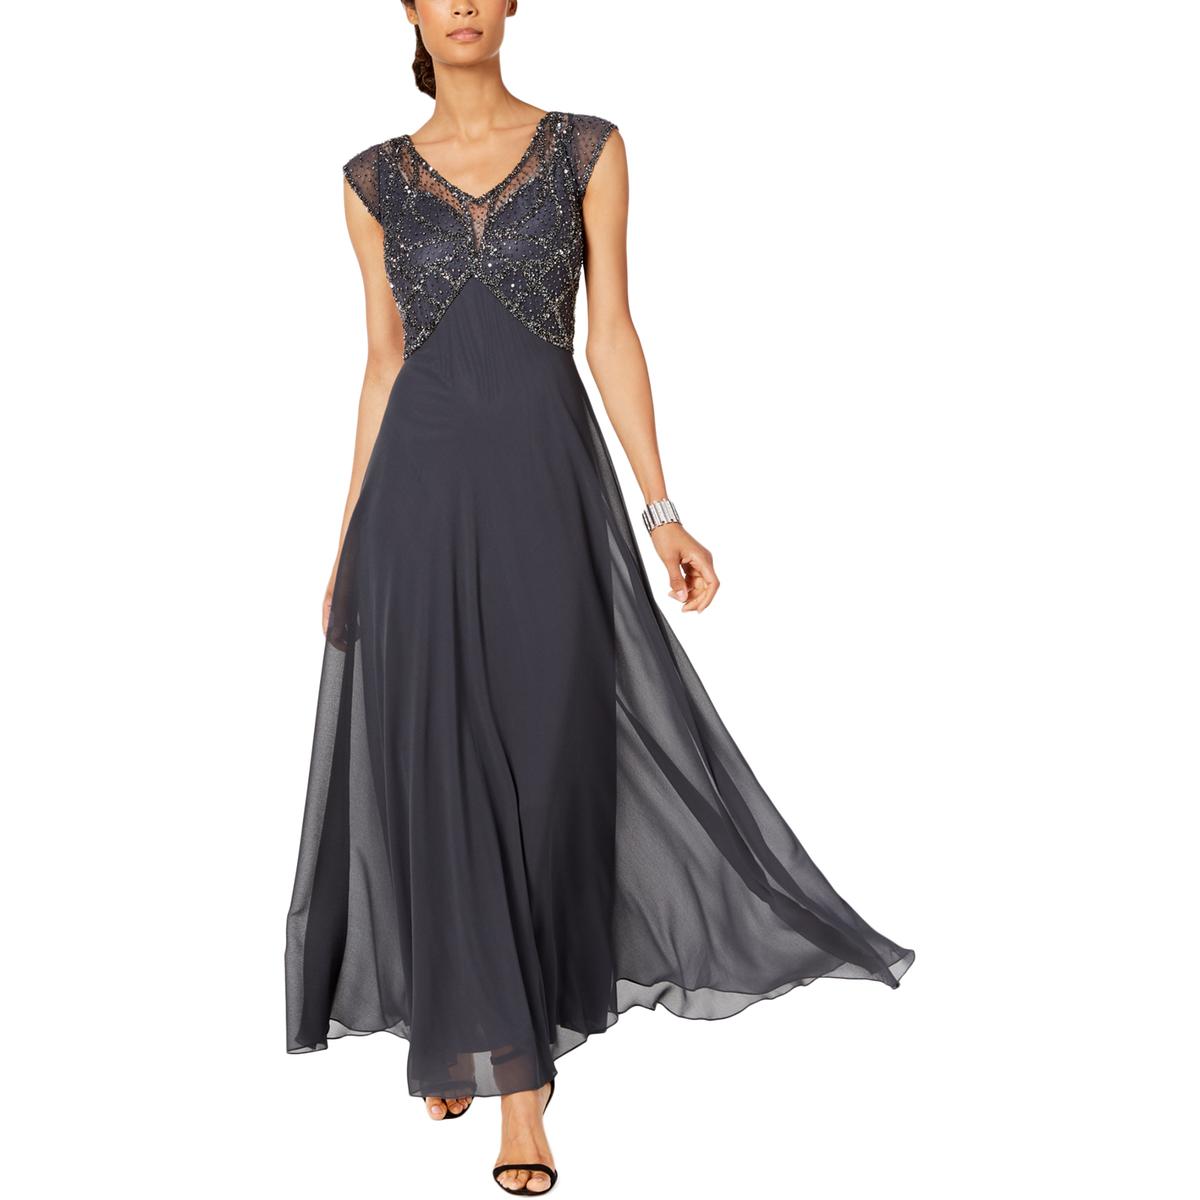 J Kara Womens Gray Embellished Cap Sleeve Formal Evening Dress Gown 8 ...